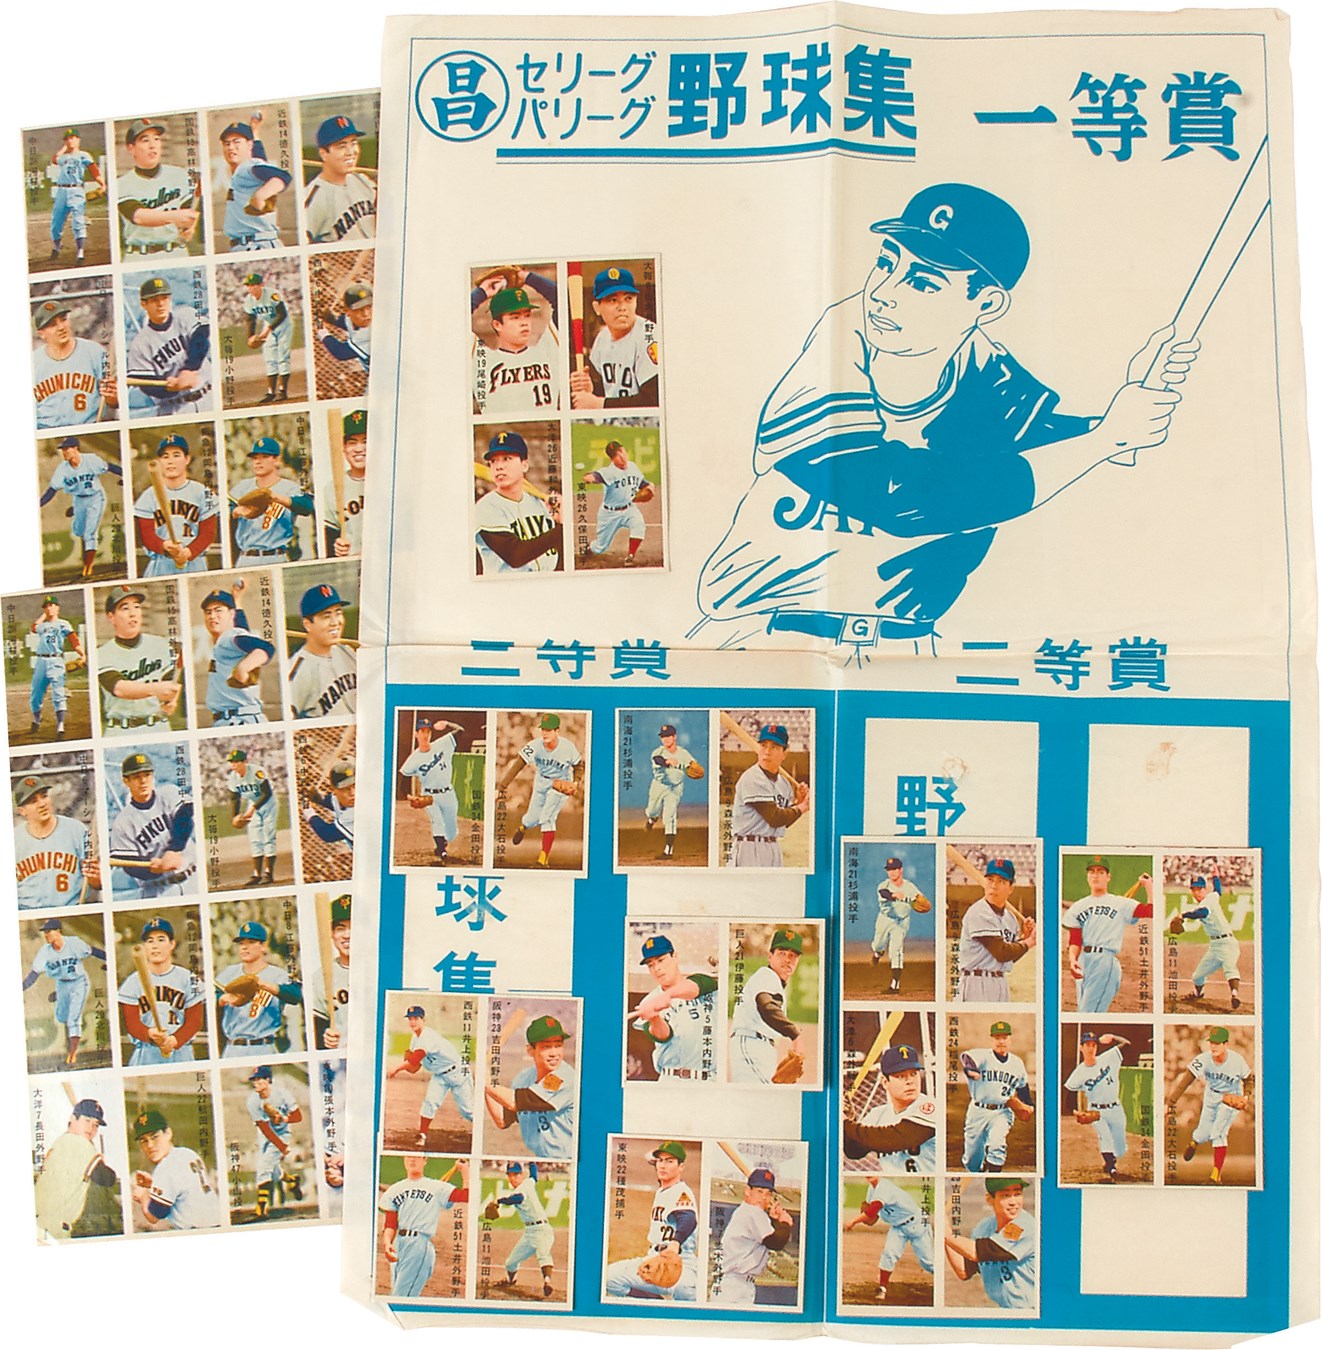 Negro League, Latin, Japanese & Int'l Baseball - 1963 Marusho JCM 13C Baseball Card Uncut Sheets & Display